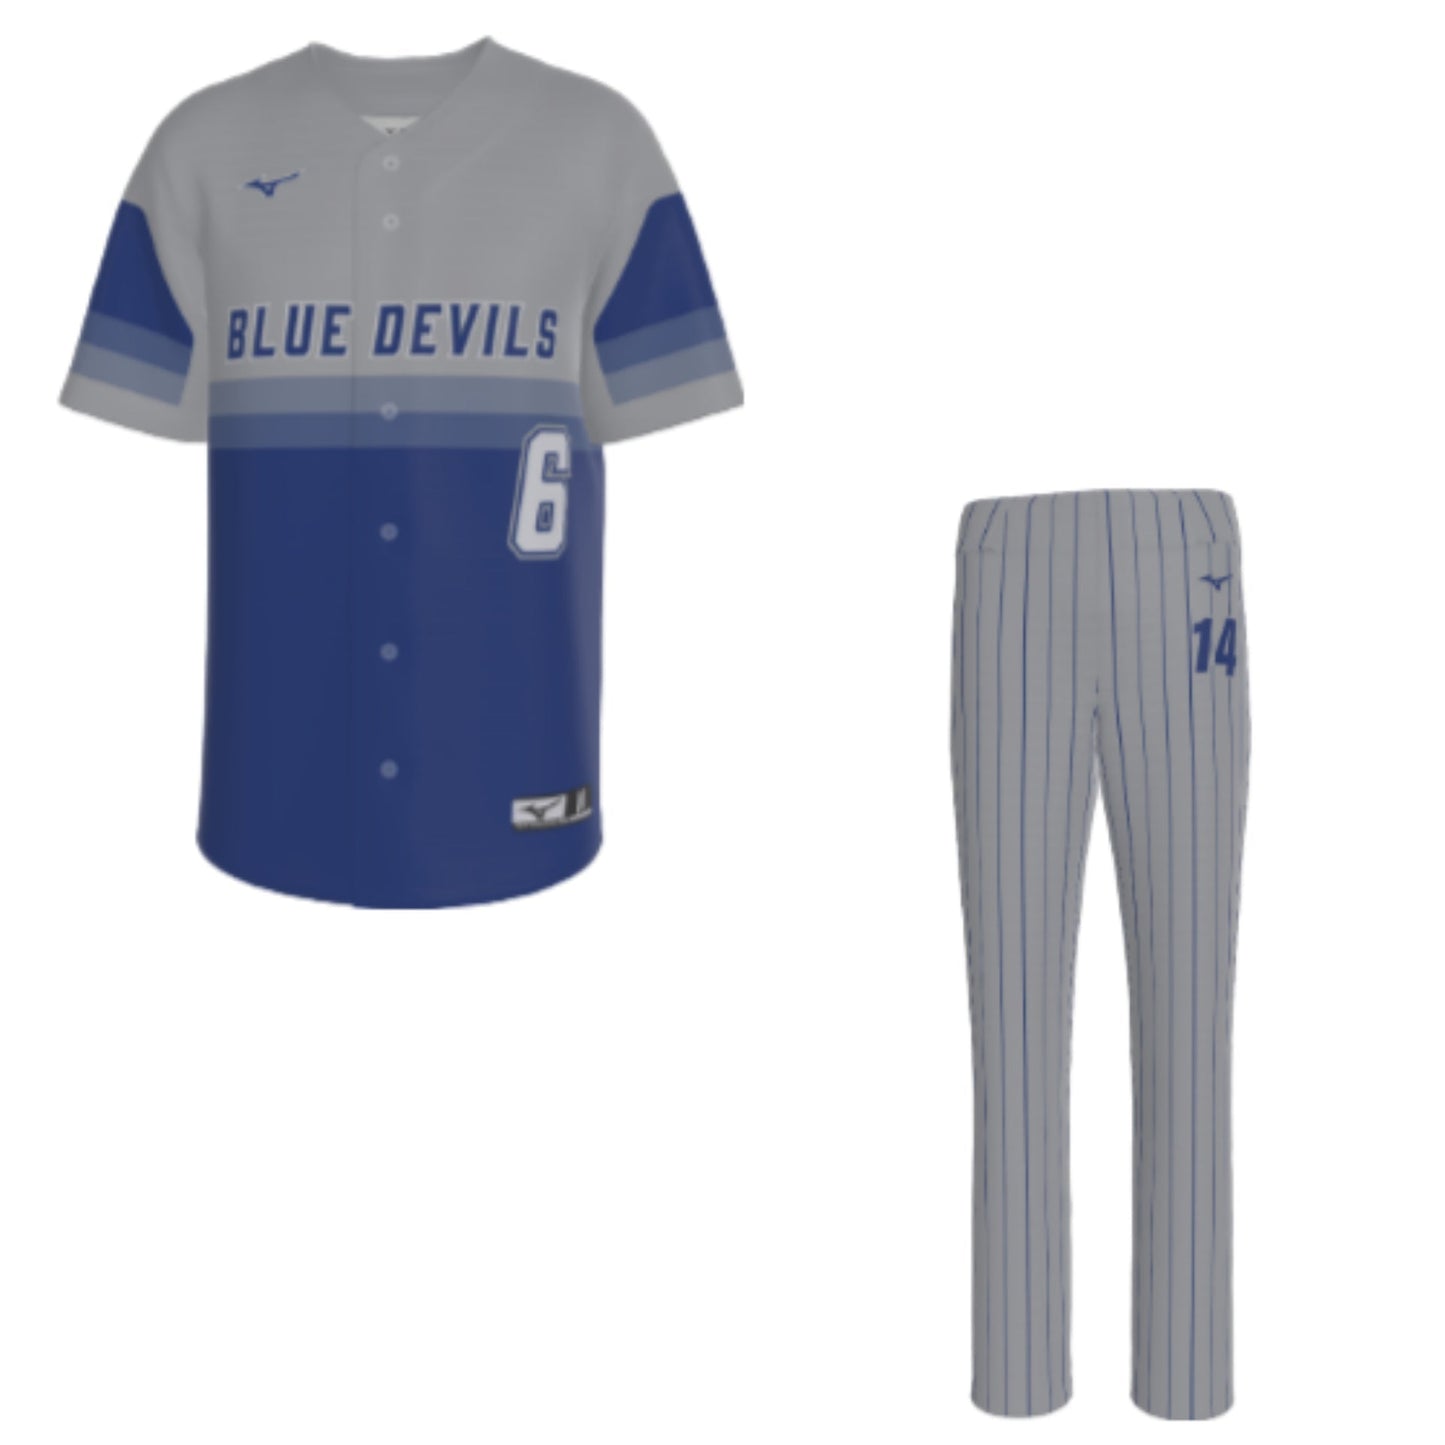 Mizuno Sublimated Baseball Uniform Package - Select